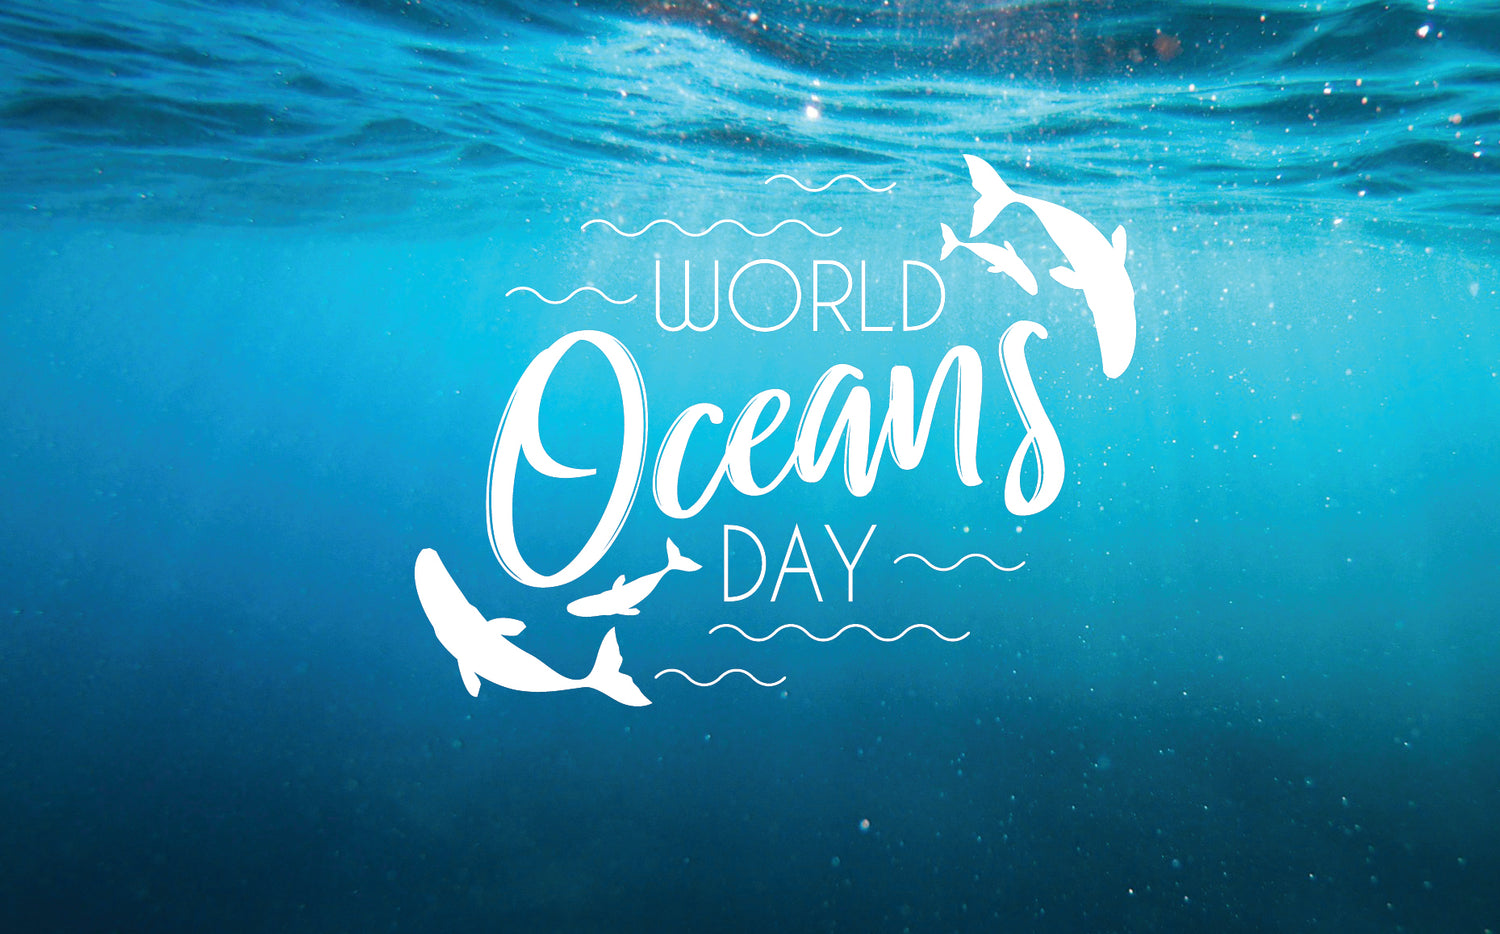 Happy World Ocean's Day!